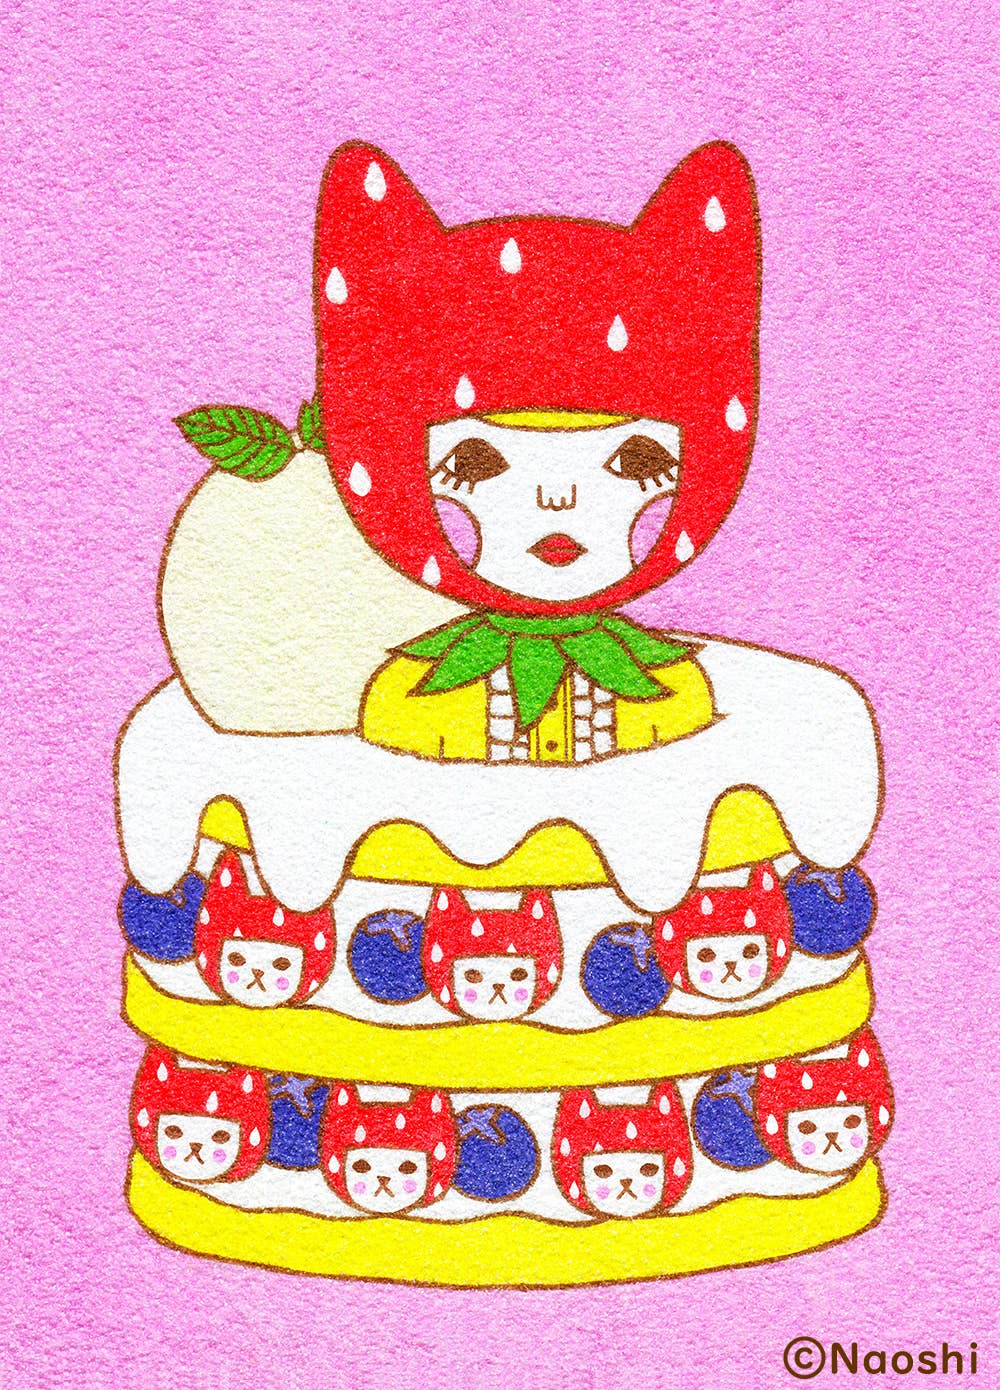 【5x7 Art Print】Pancake of Strawberry Cats